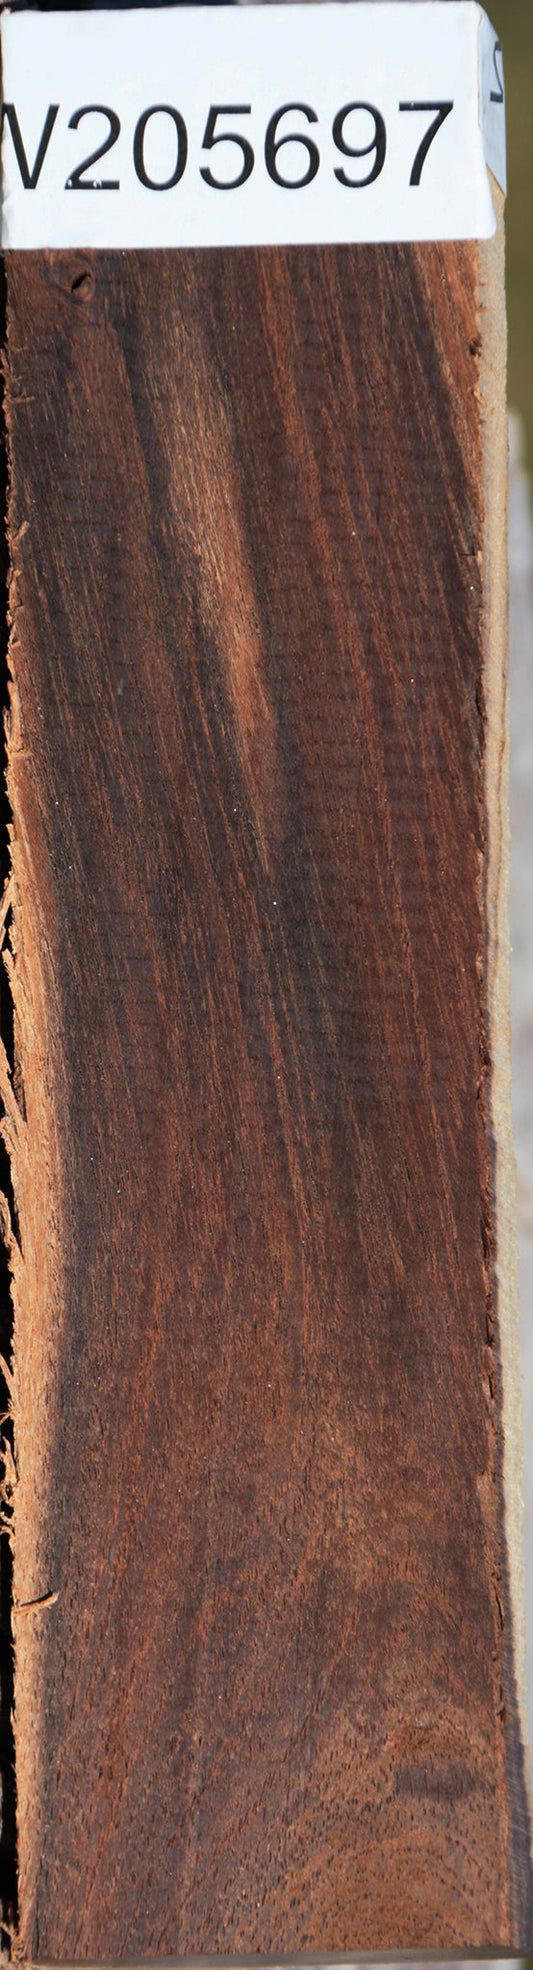 Leadwood Lumber